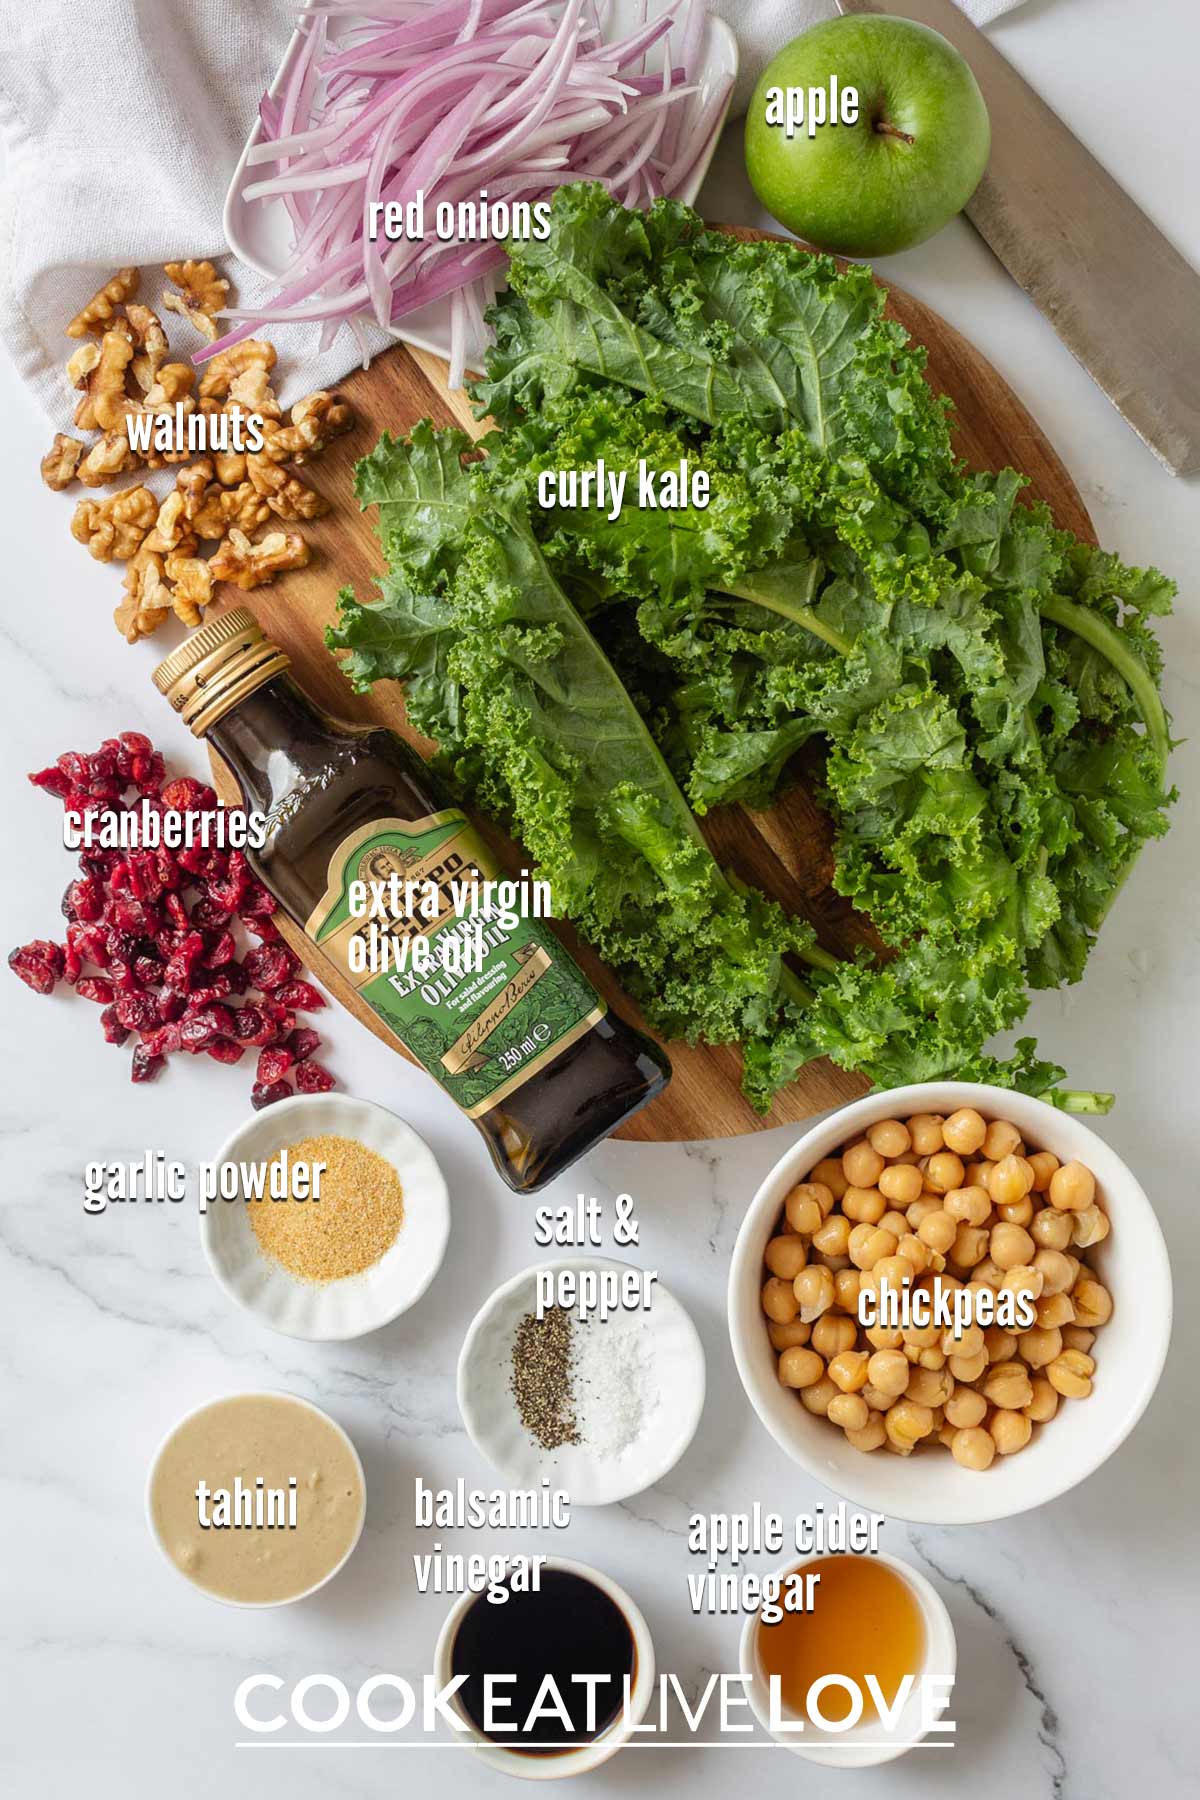 Ingredients to make vegan kale salad on the table.